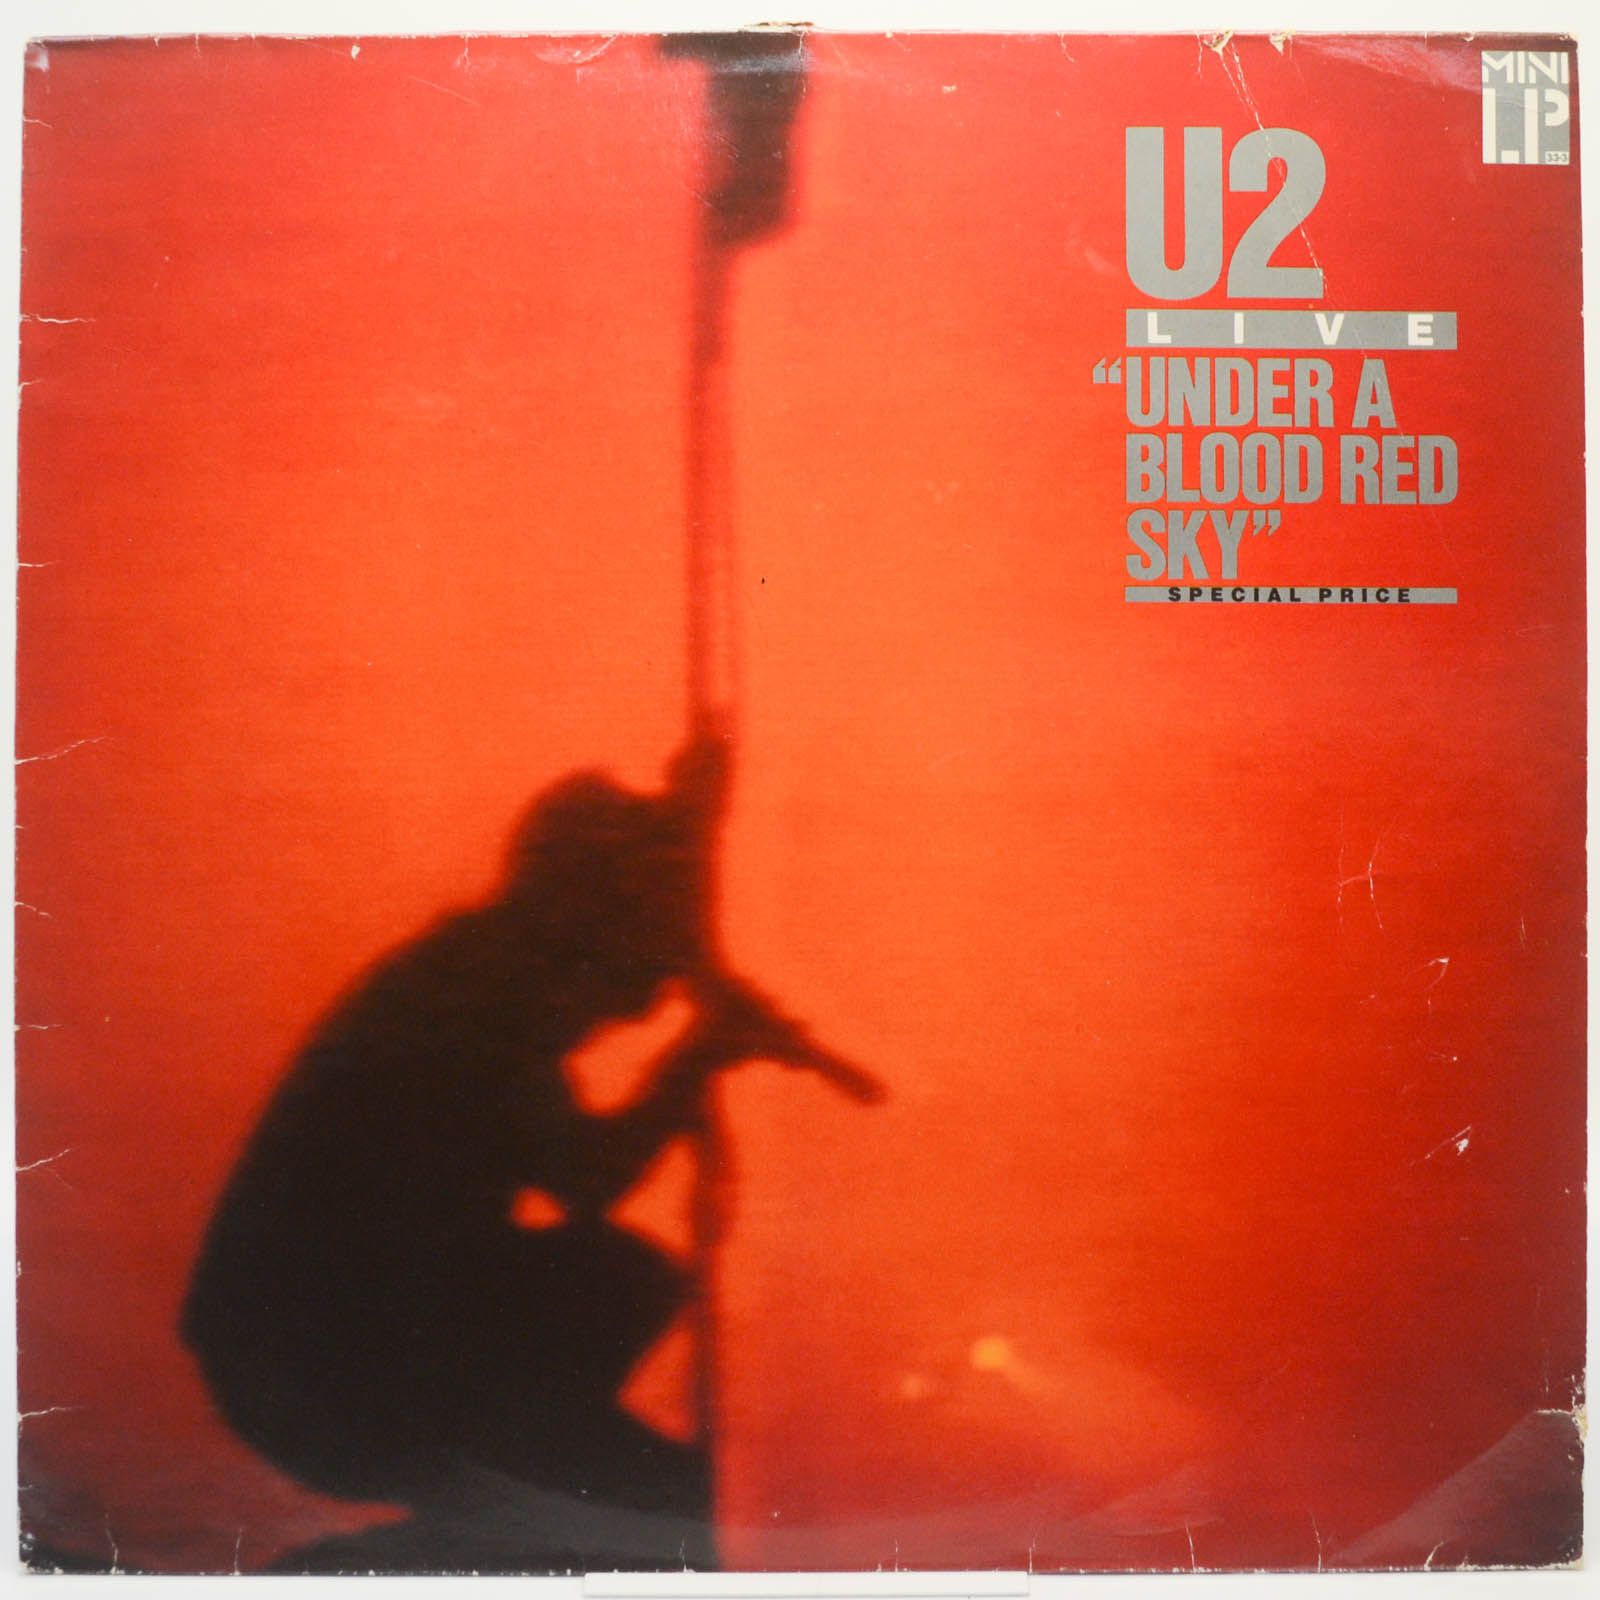 U2 — Live "Under A Blood Red Sky", 1983